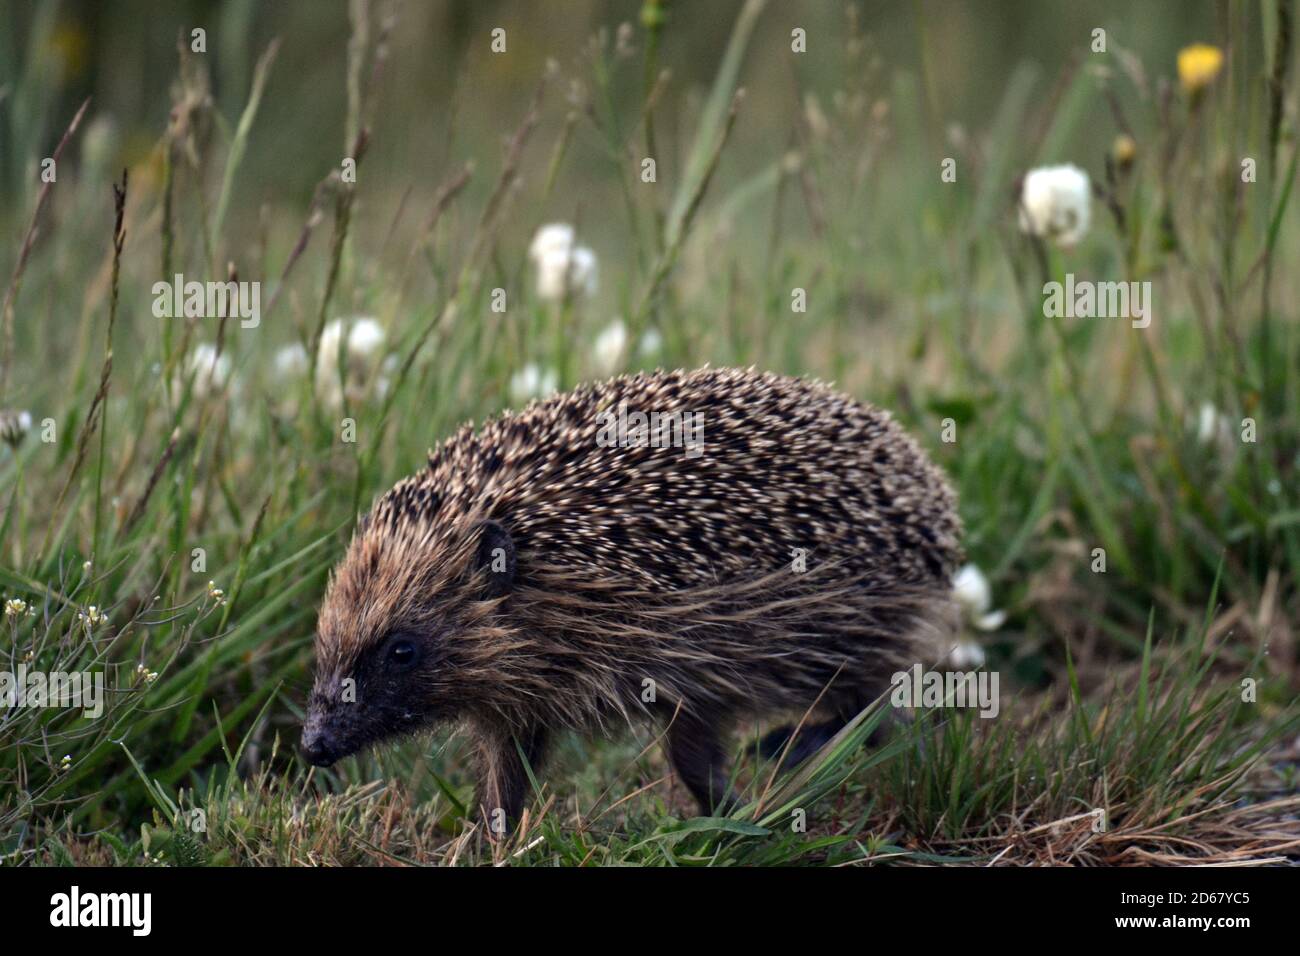 Brown breasted or European hedgehog, Erinaceus europaeus, invasive species in New Zealand, South Island, New Zealand Stock Photo